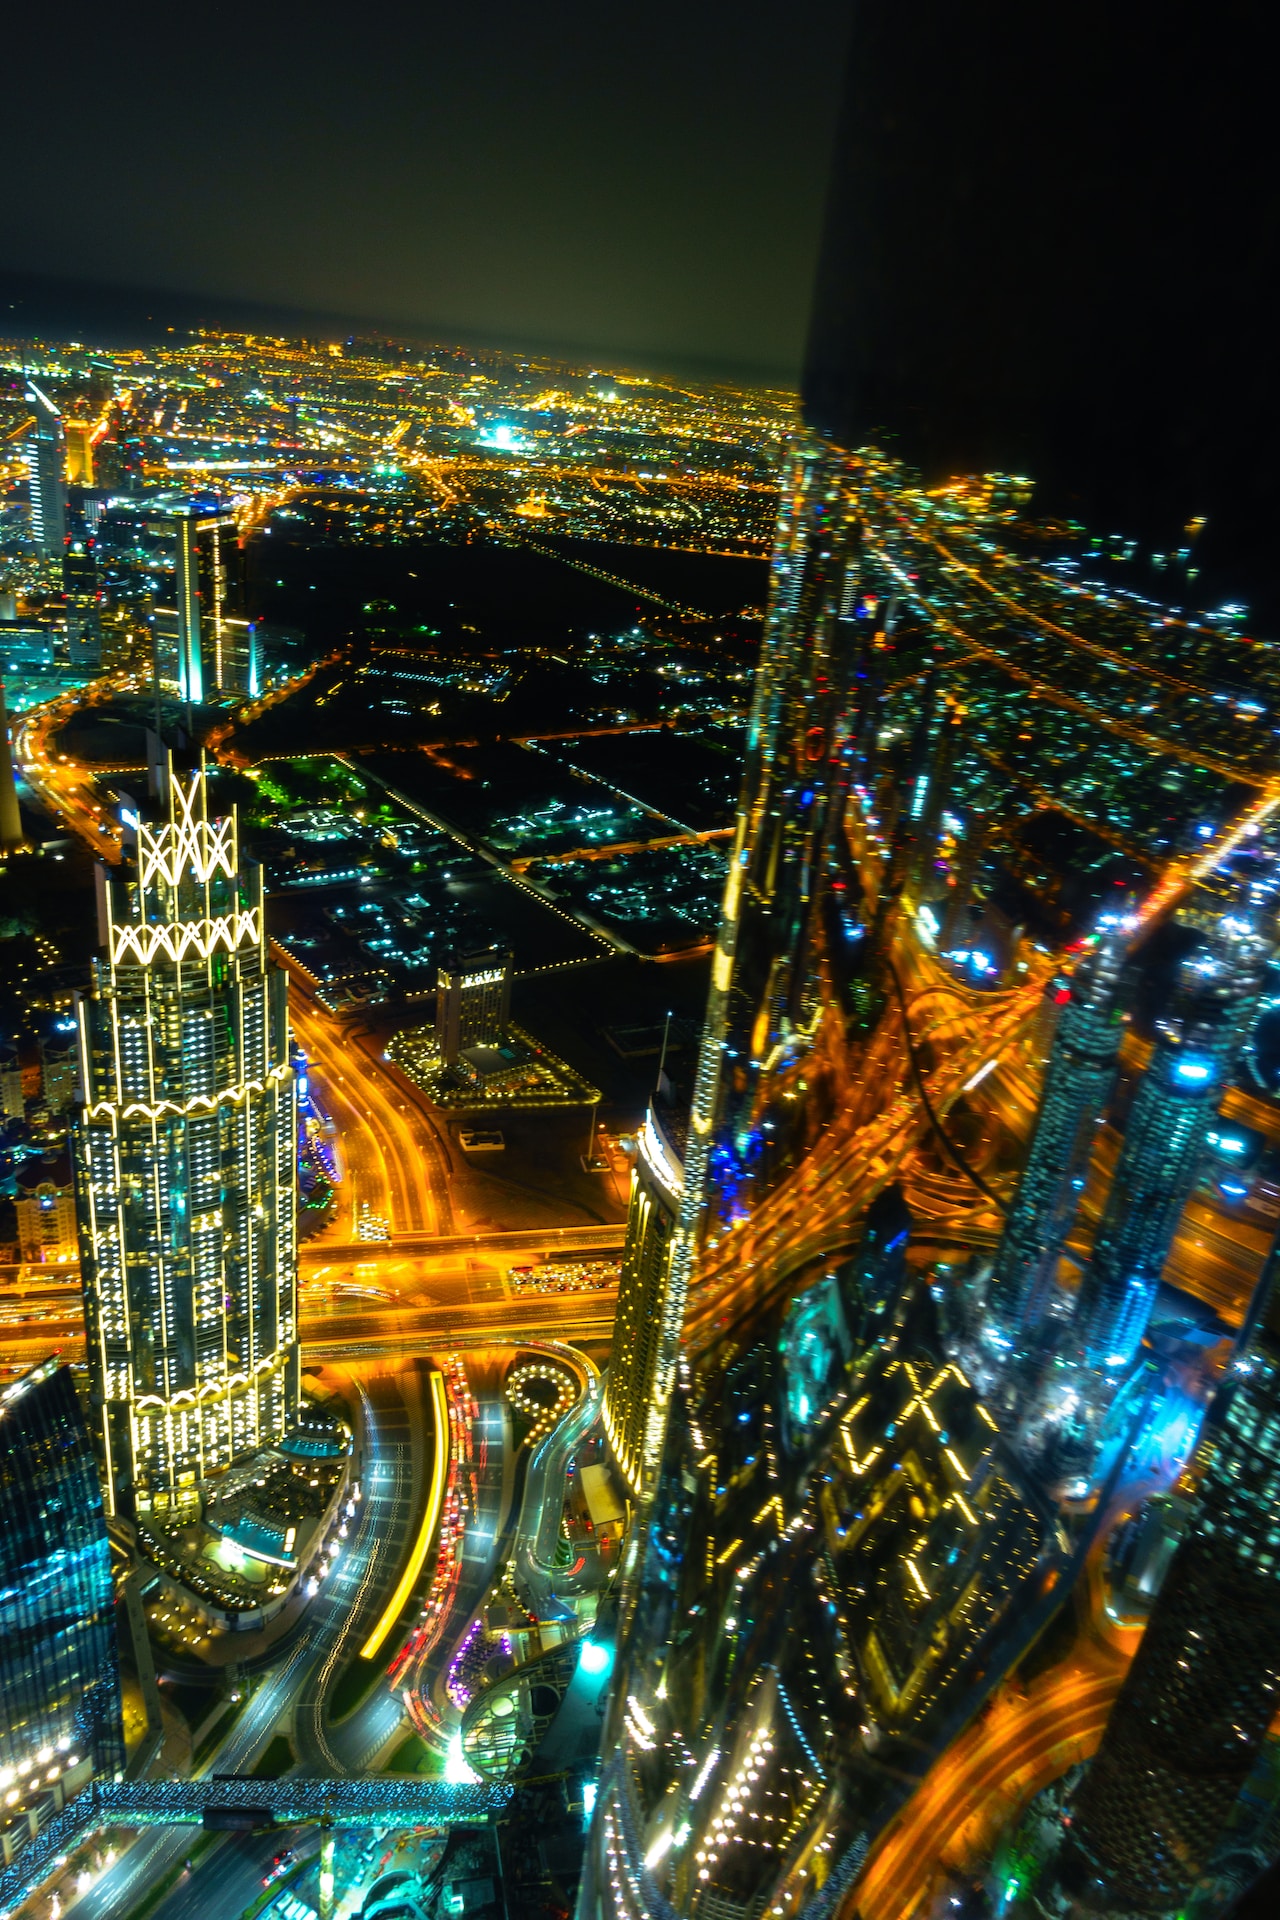 Which is the highest floor at Burj Khalifa?